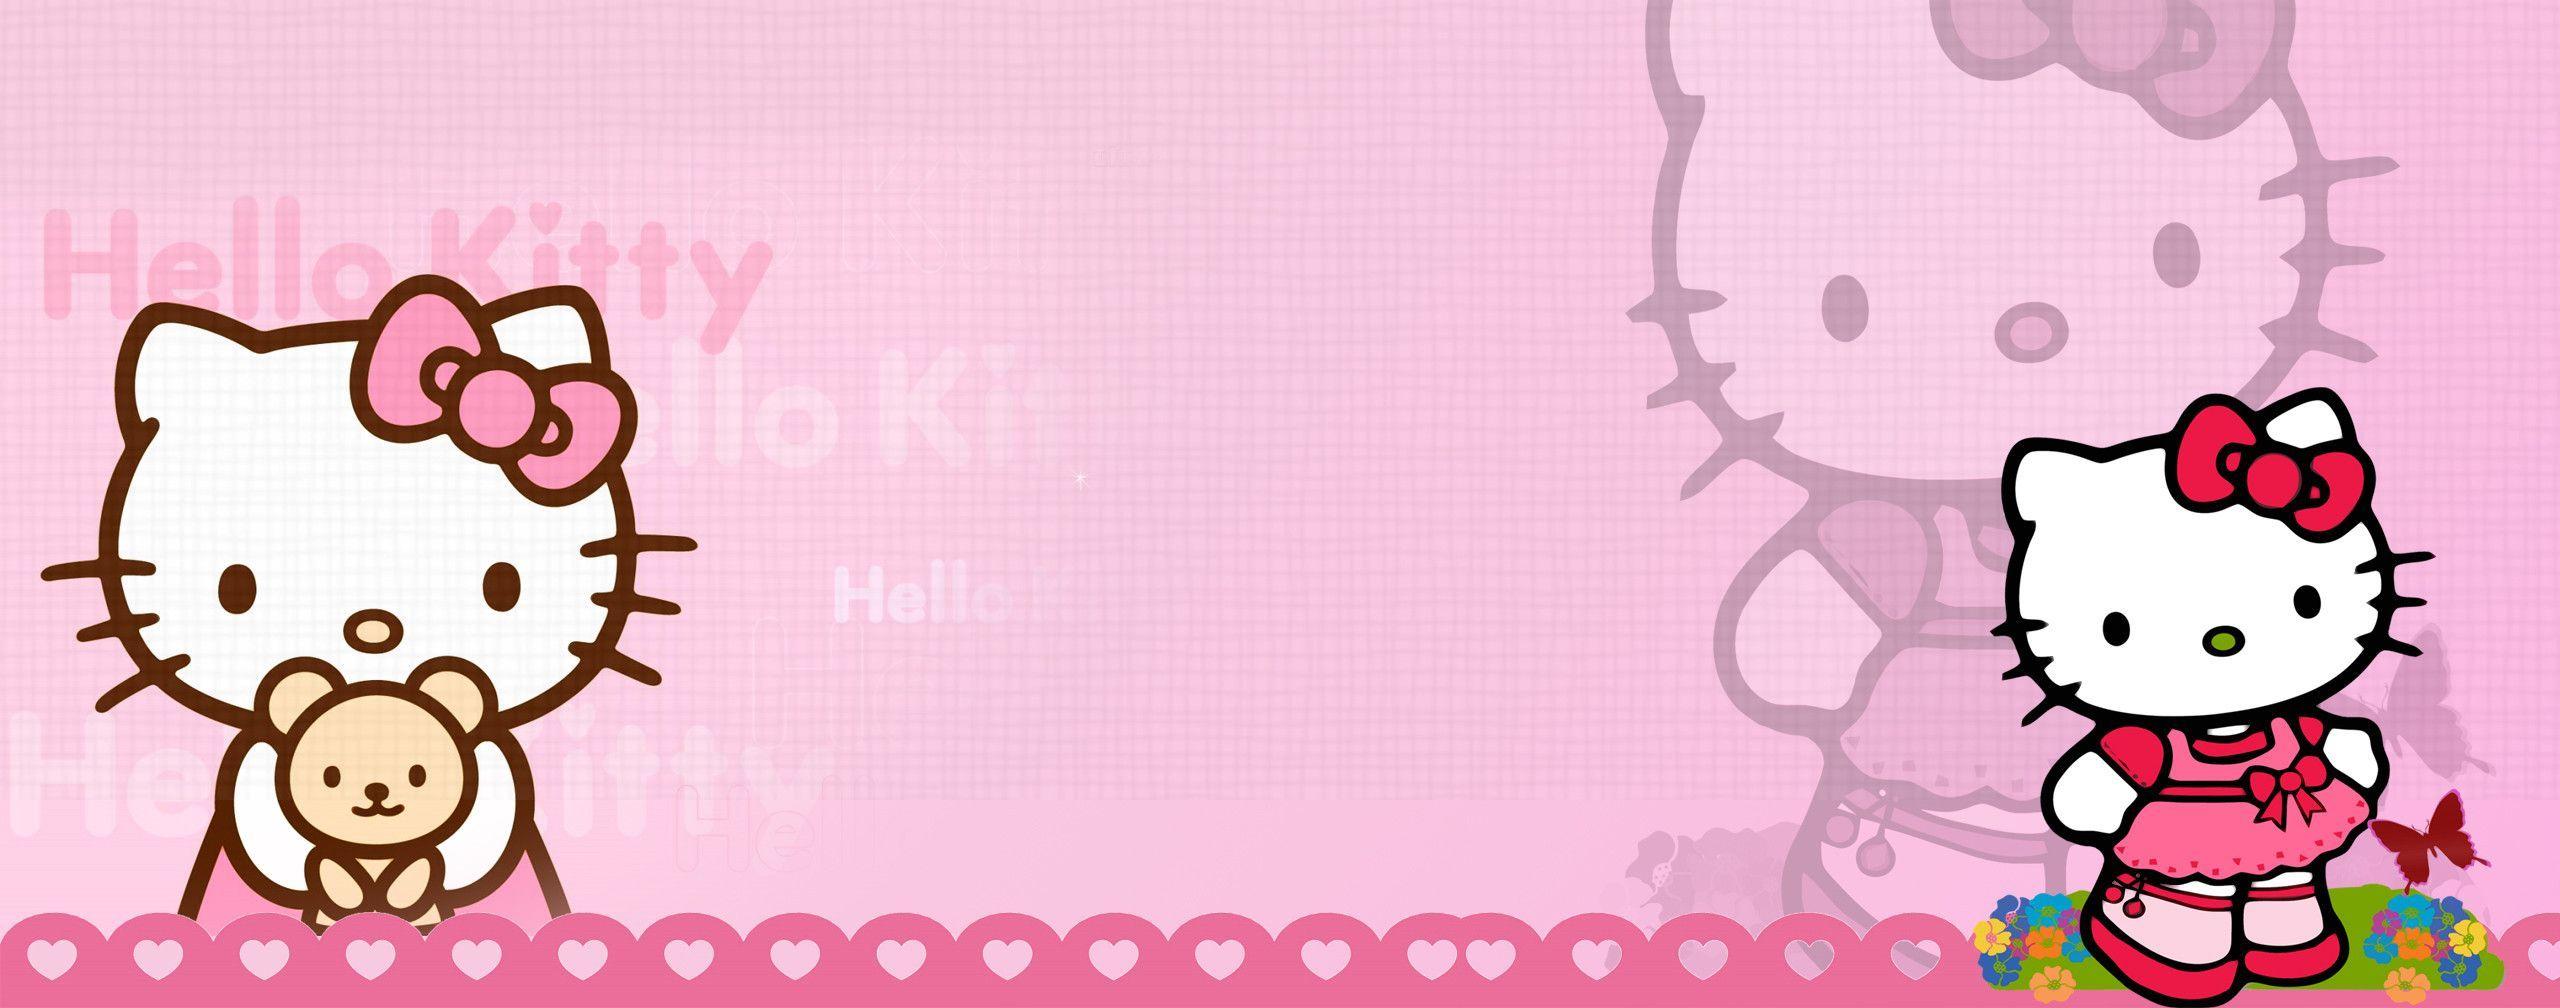 Download Hello Kitty Dual Monitor Wallp Brh Wallpaper